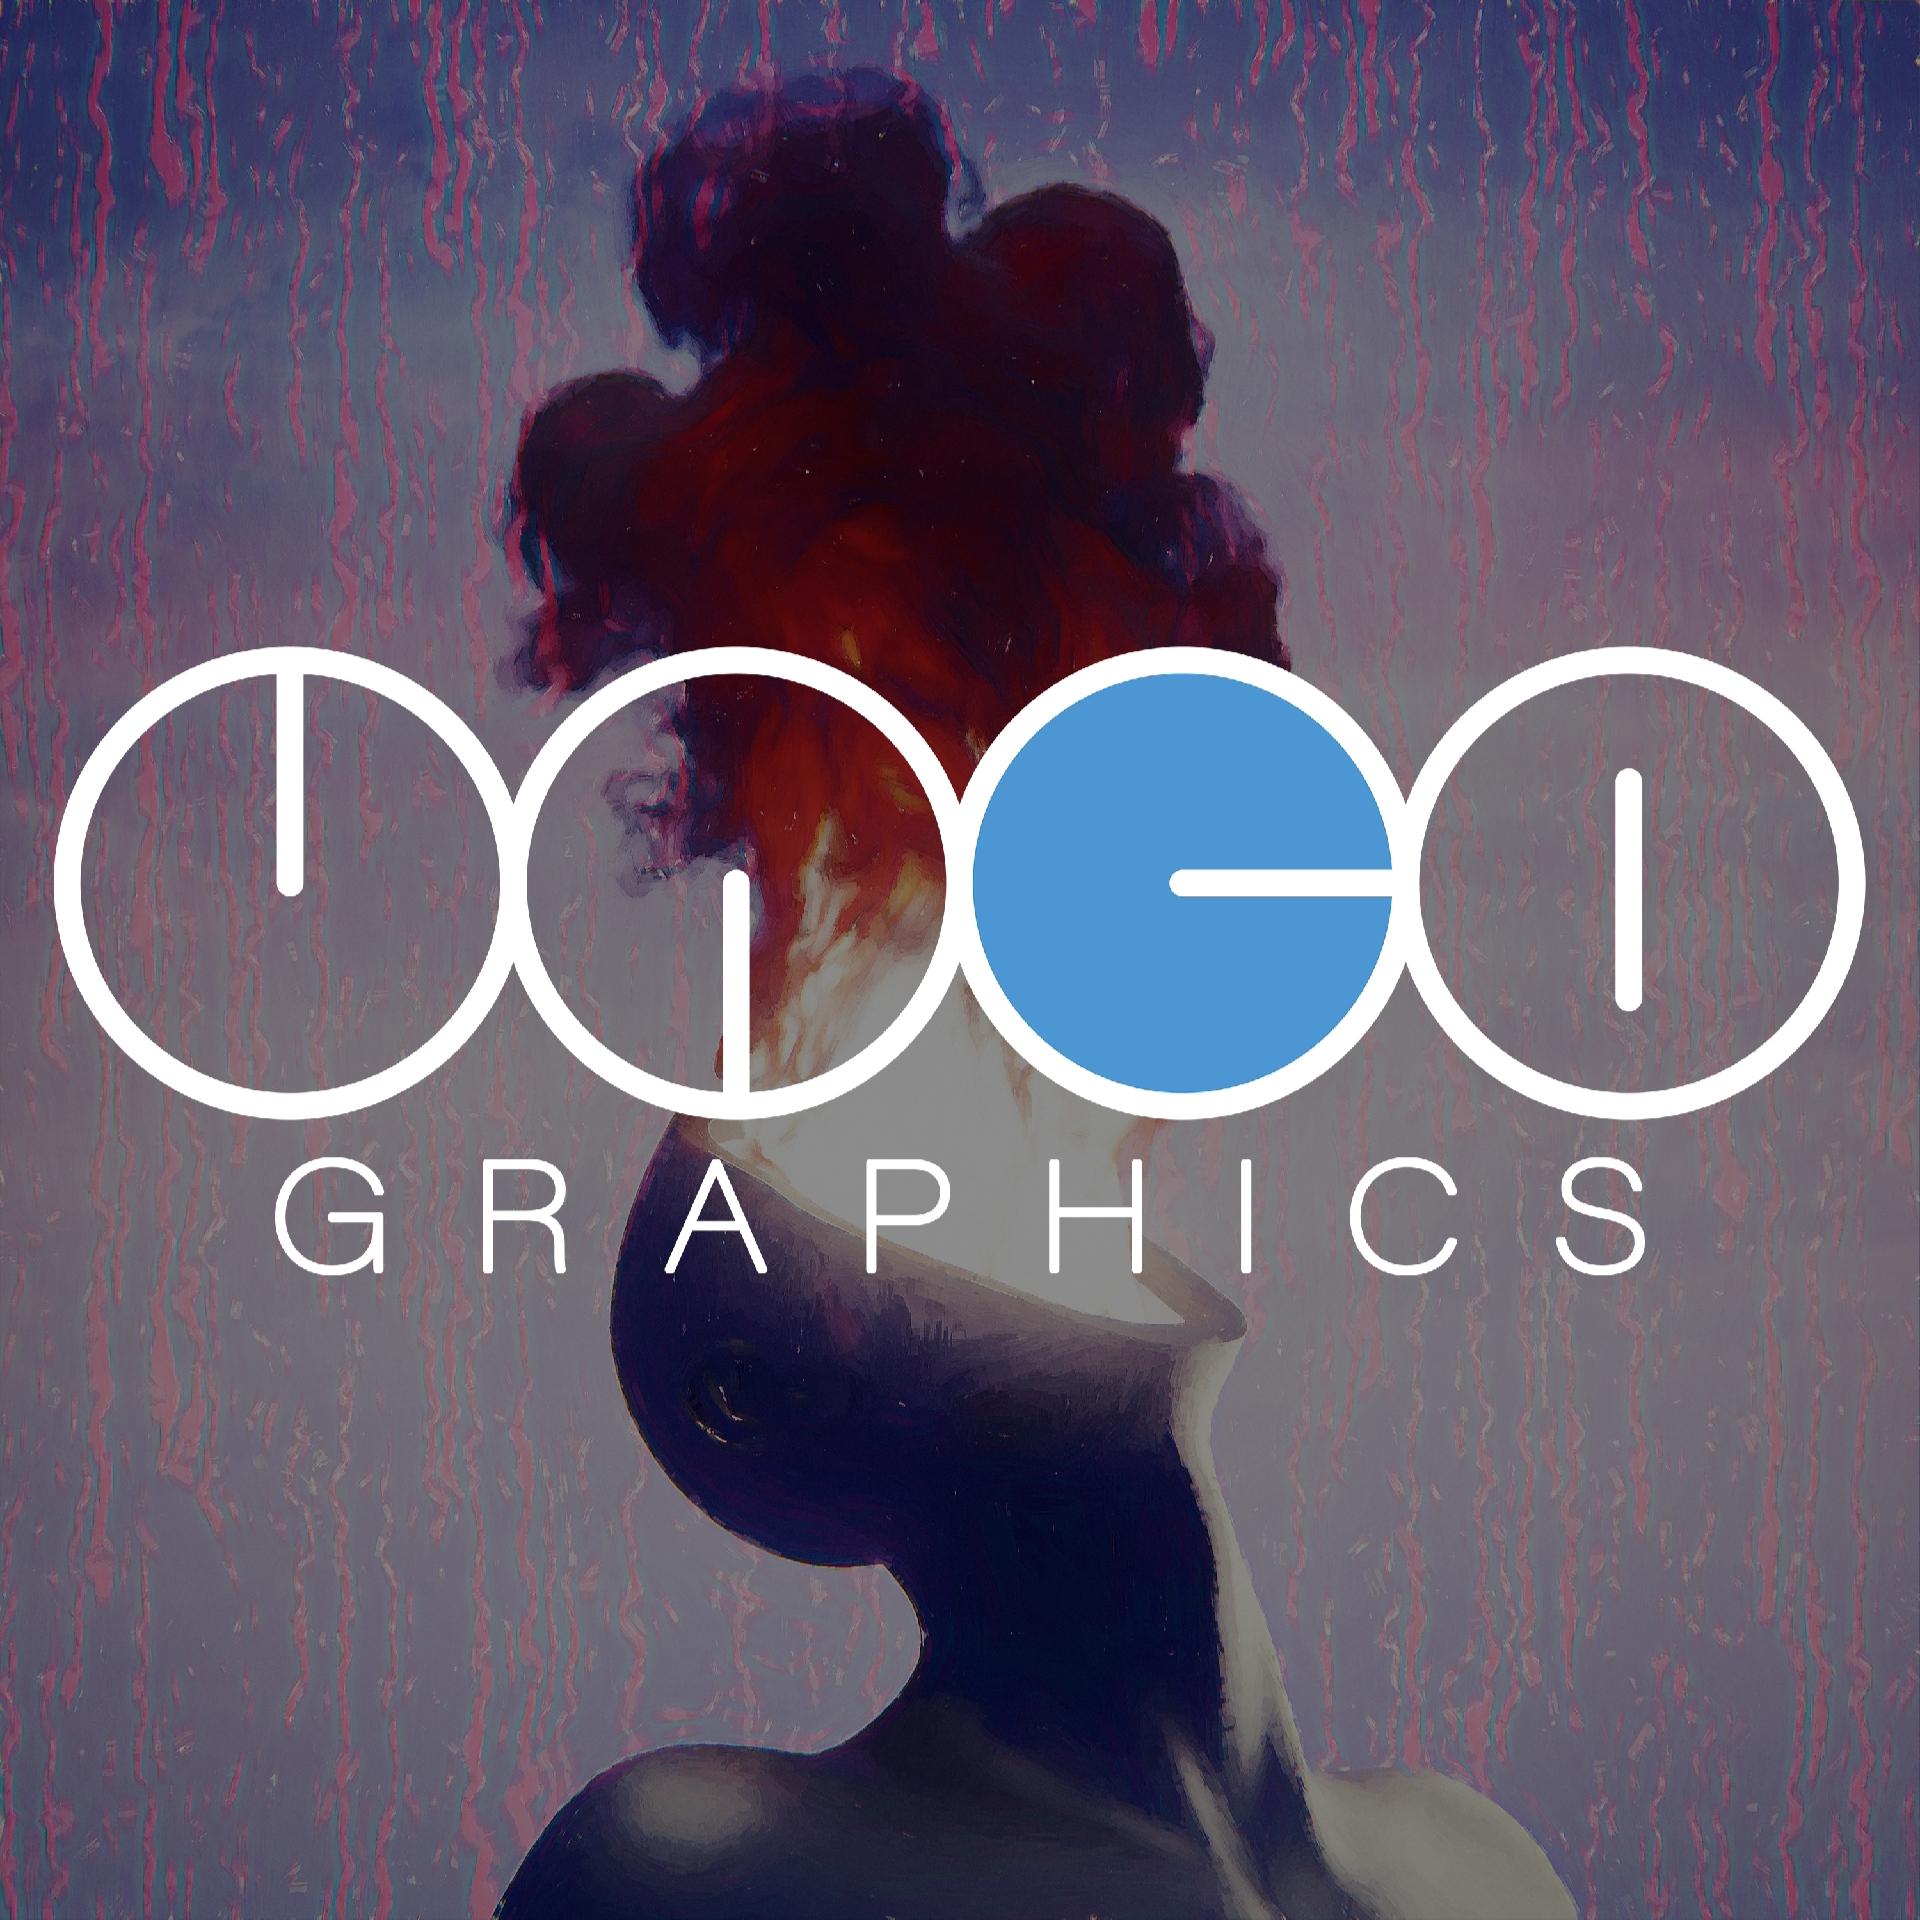 Unco Graphics's images